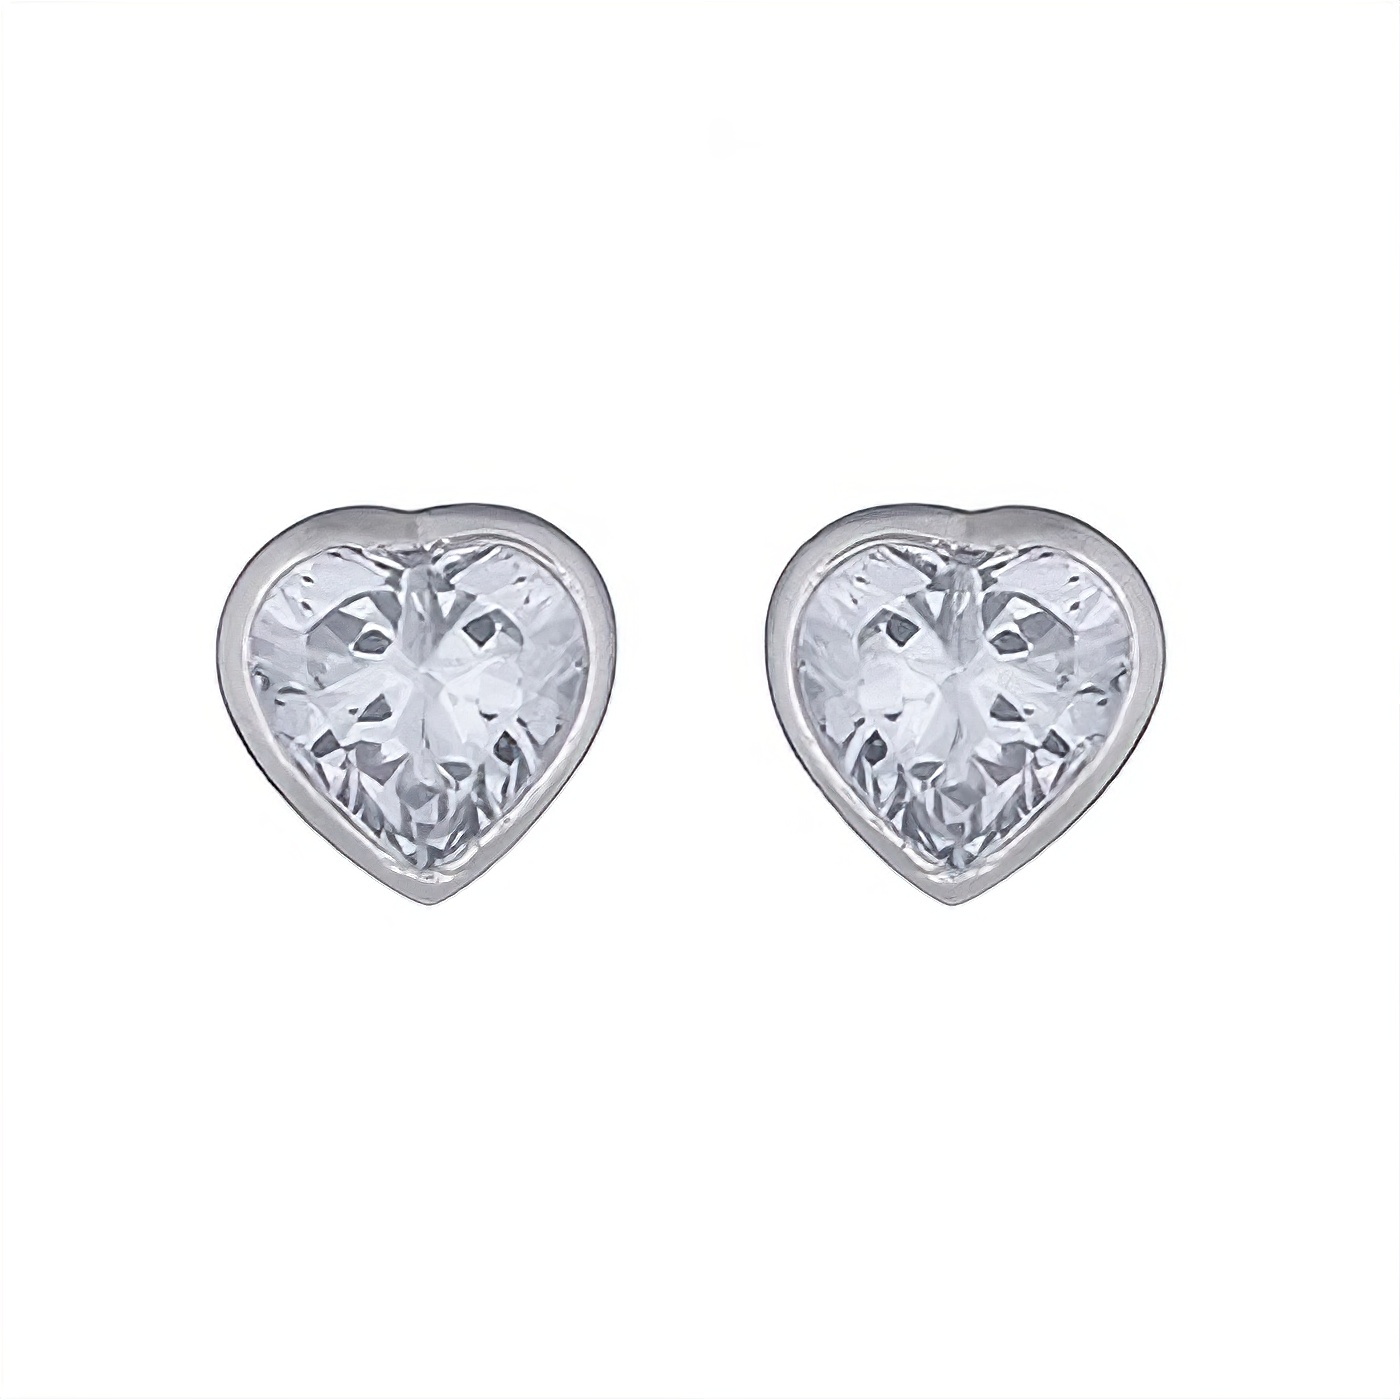 Heart Faceted Clear Cubic Zirconia Stud Earrings 